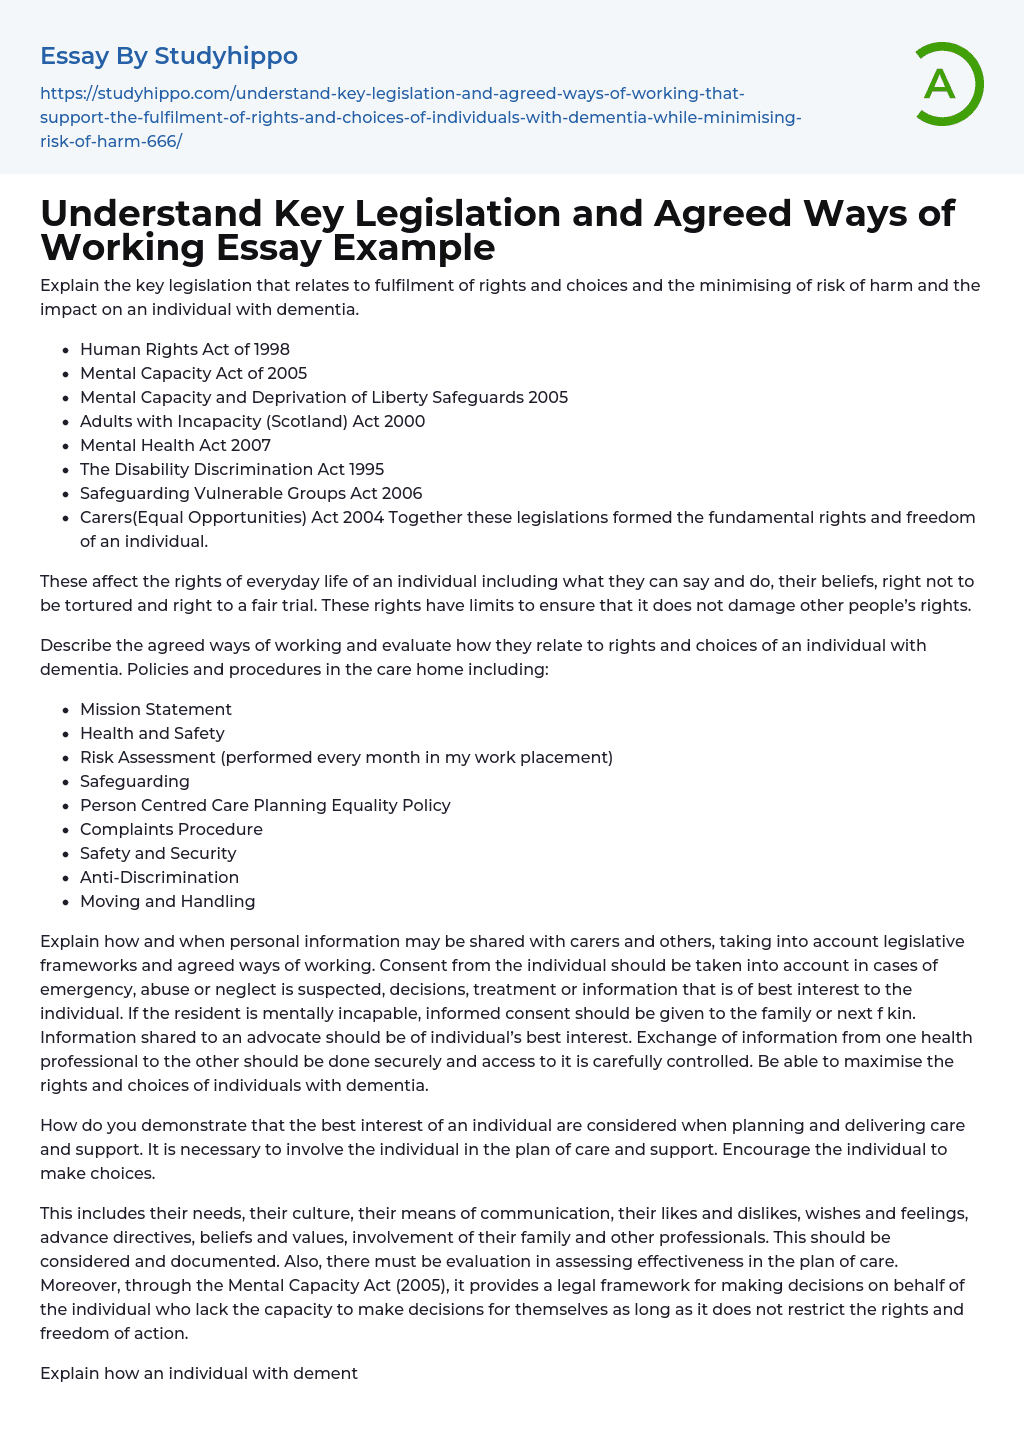 Understand Key Legislation and Agreed Ways of Working Essay Example